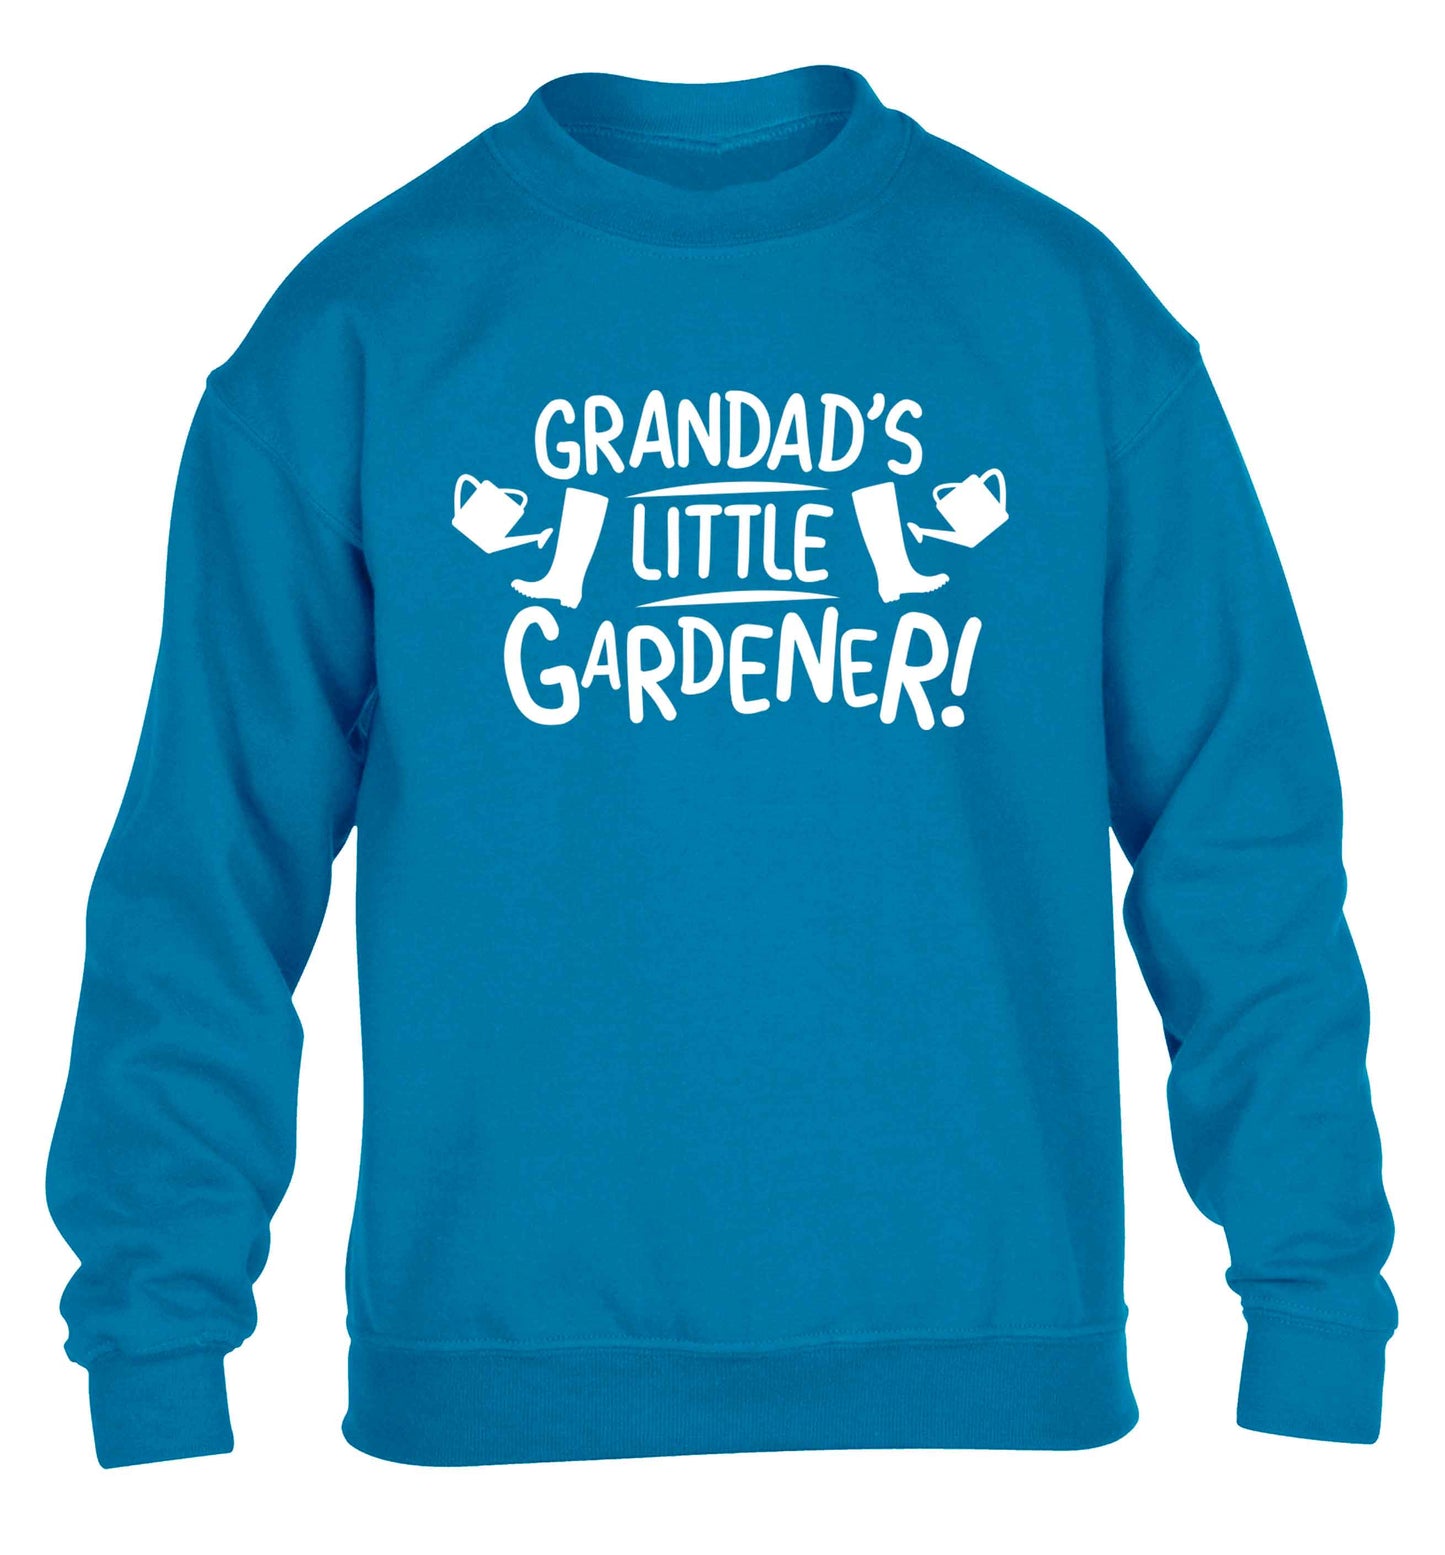 Grandad's little gardener children's blue sweater 12-13 Years